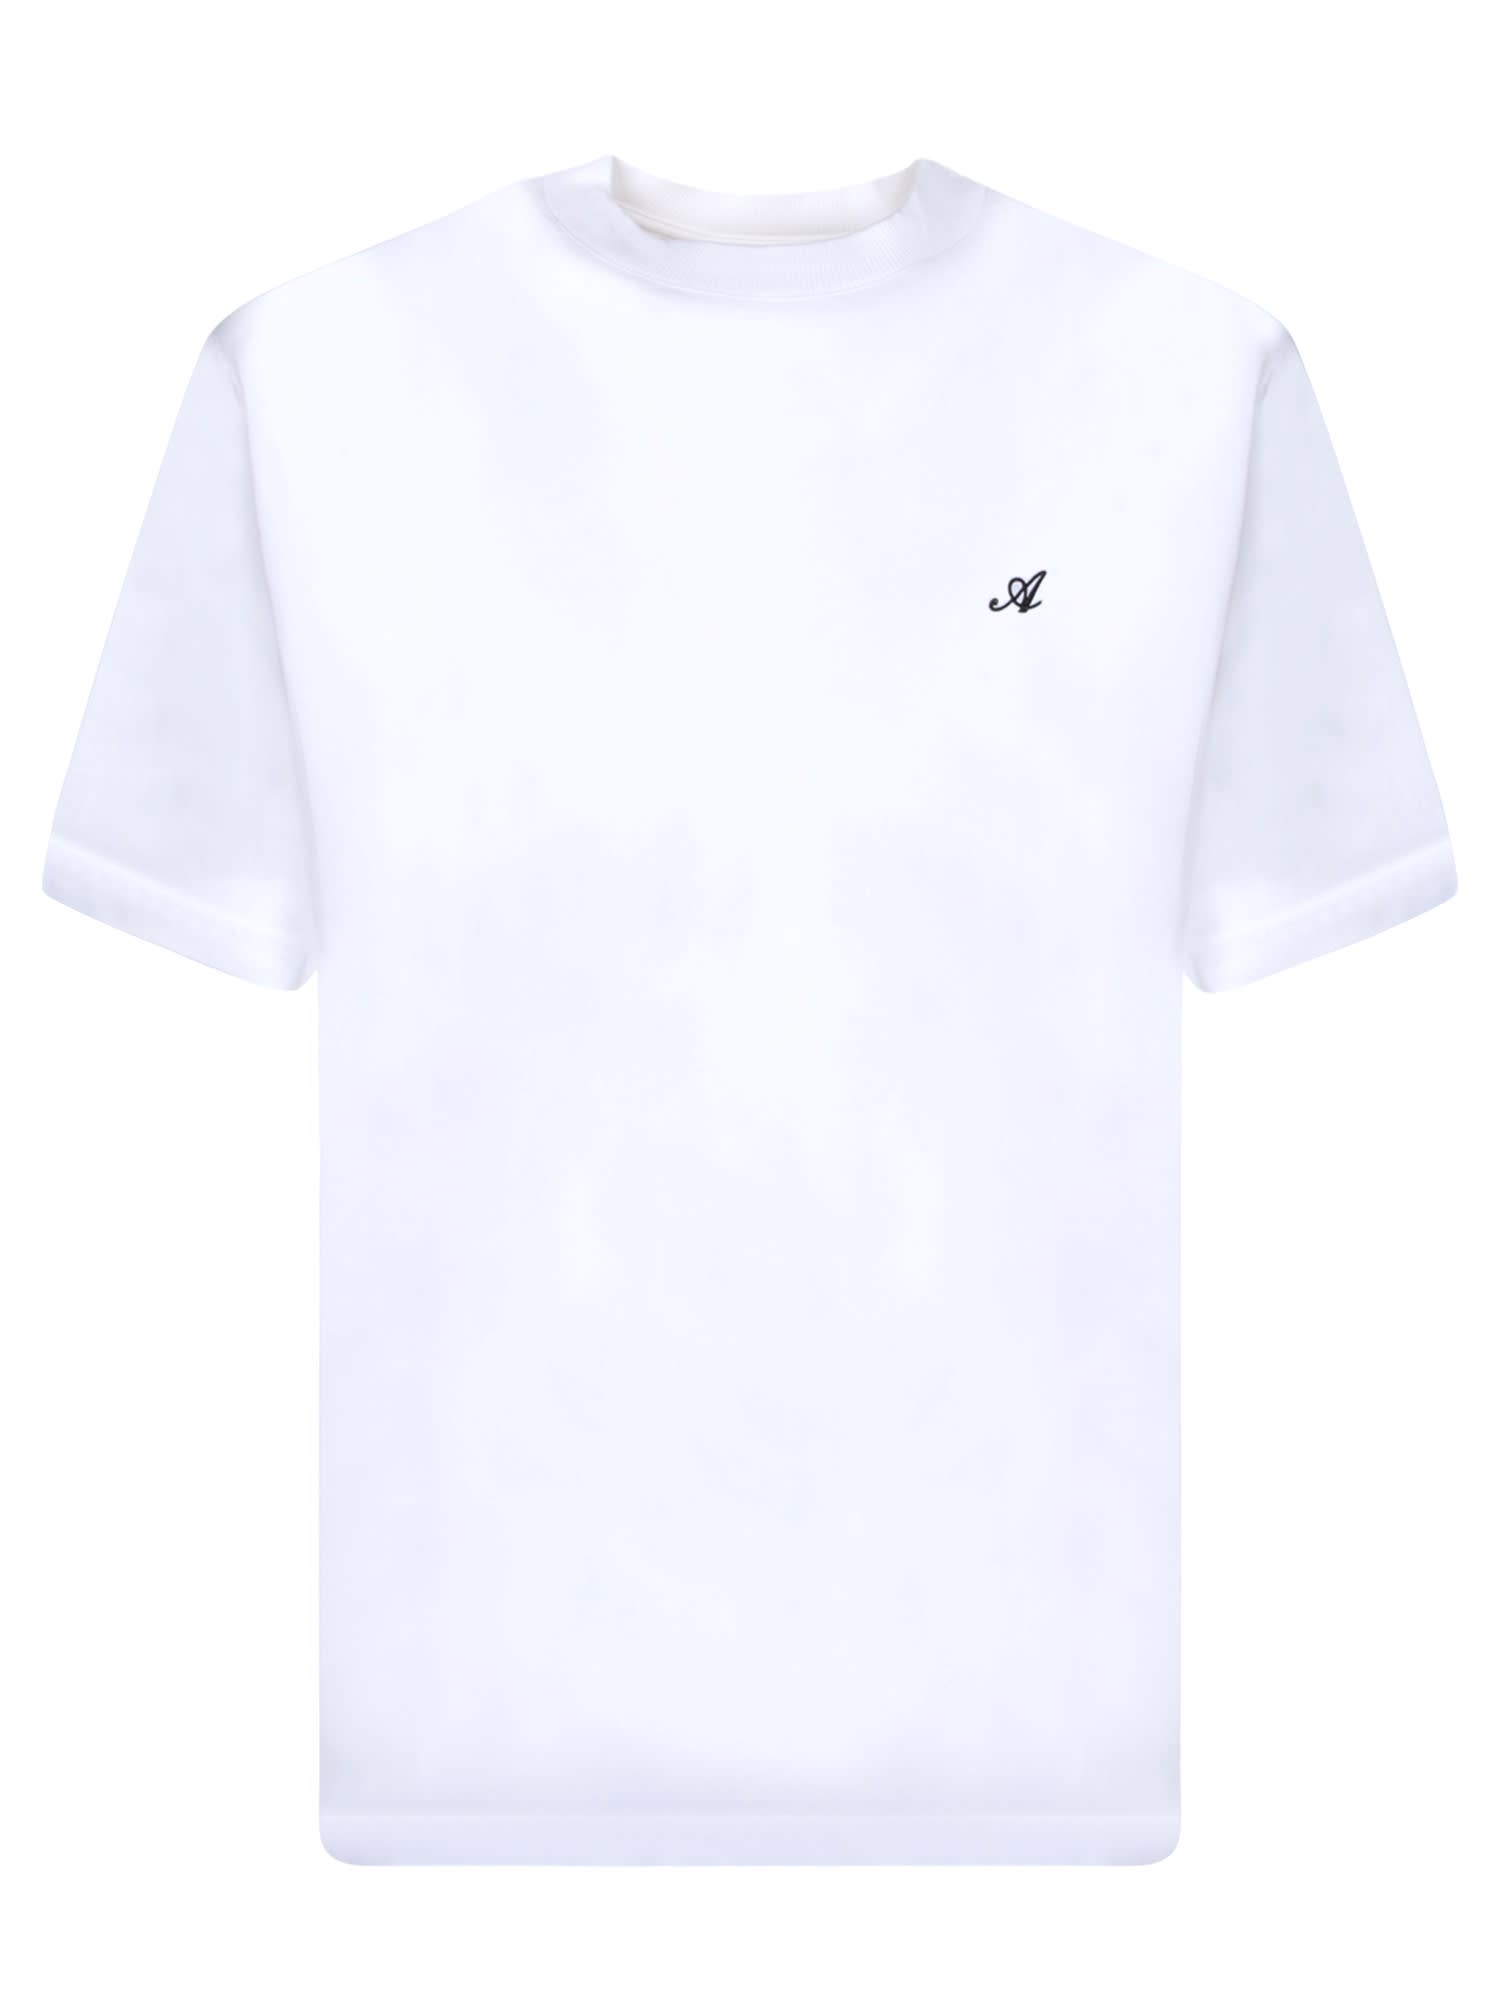 Signature T-shirt In White Cotton